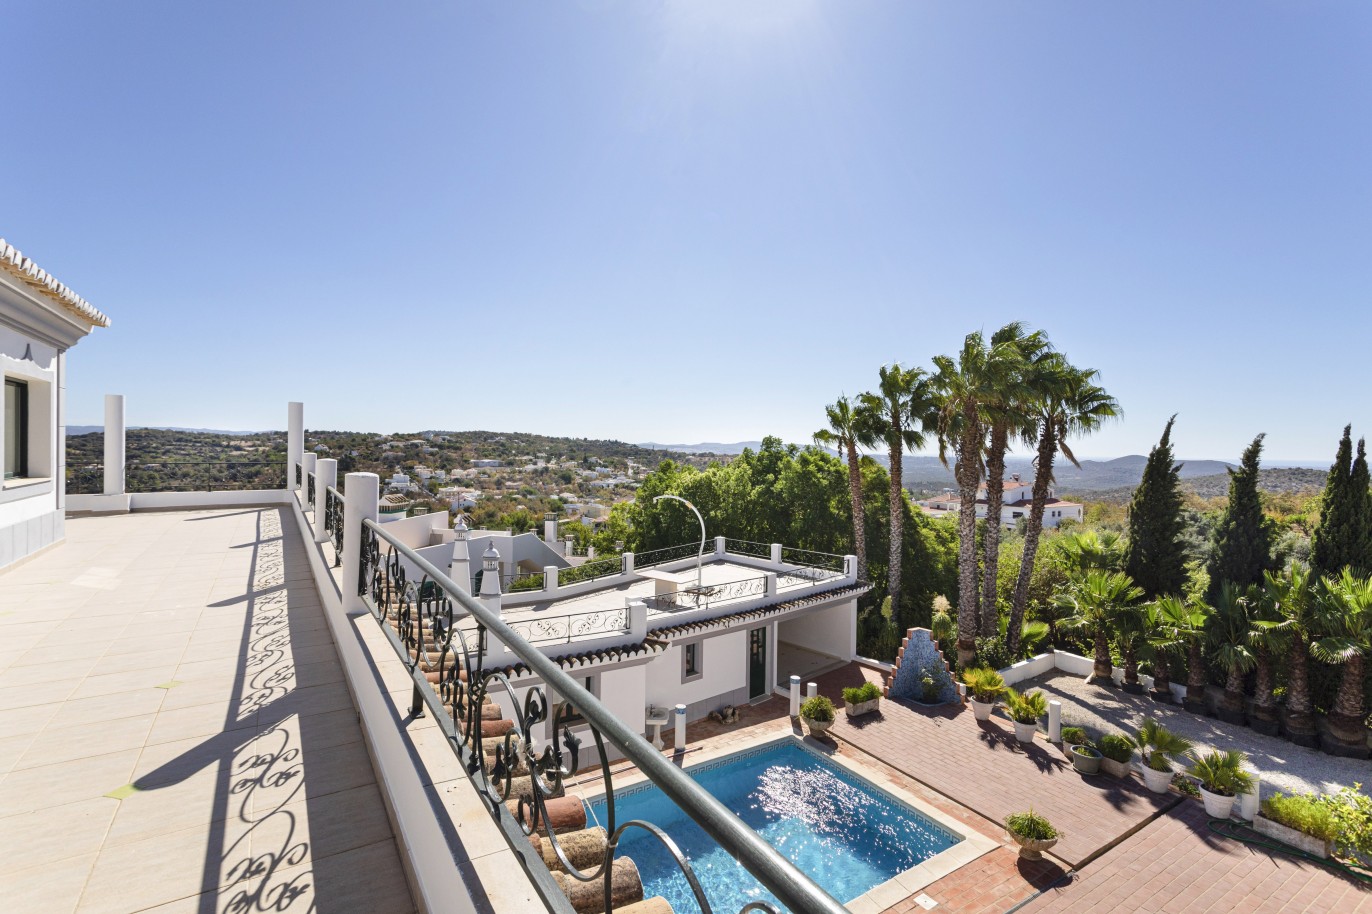 Villa zum Verkauf mit pool, Meer-und Bergblick, Loulé, Algarve, Portugal_236422